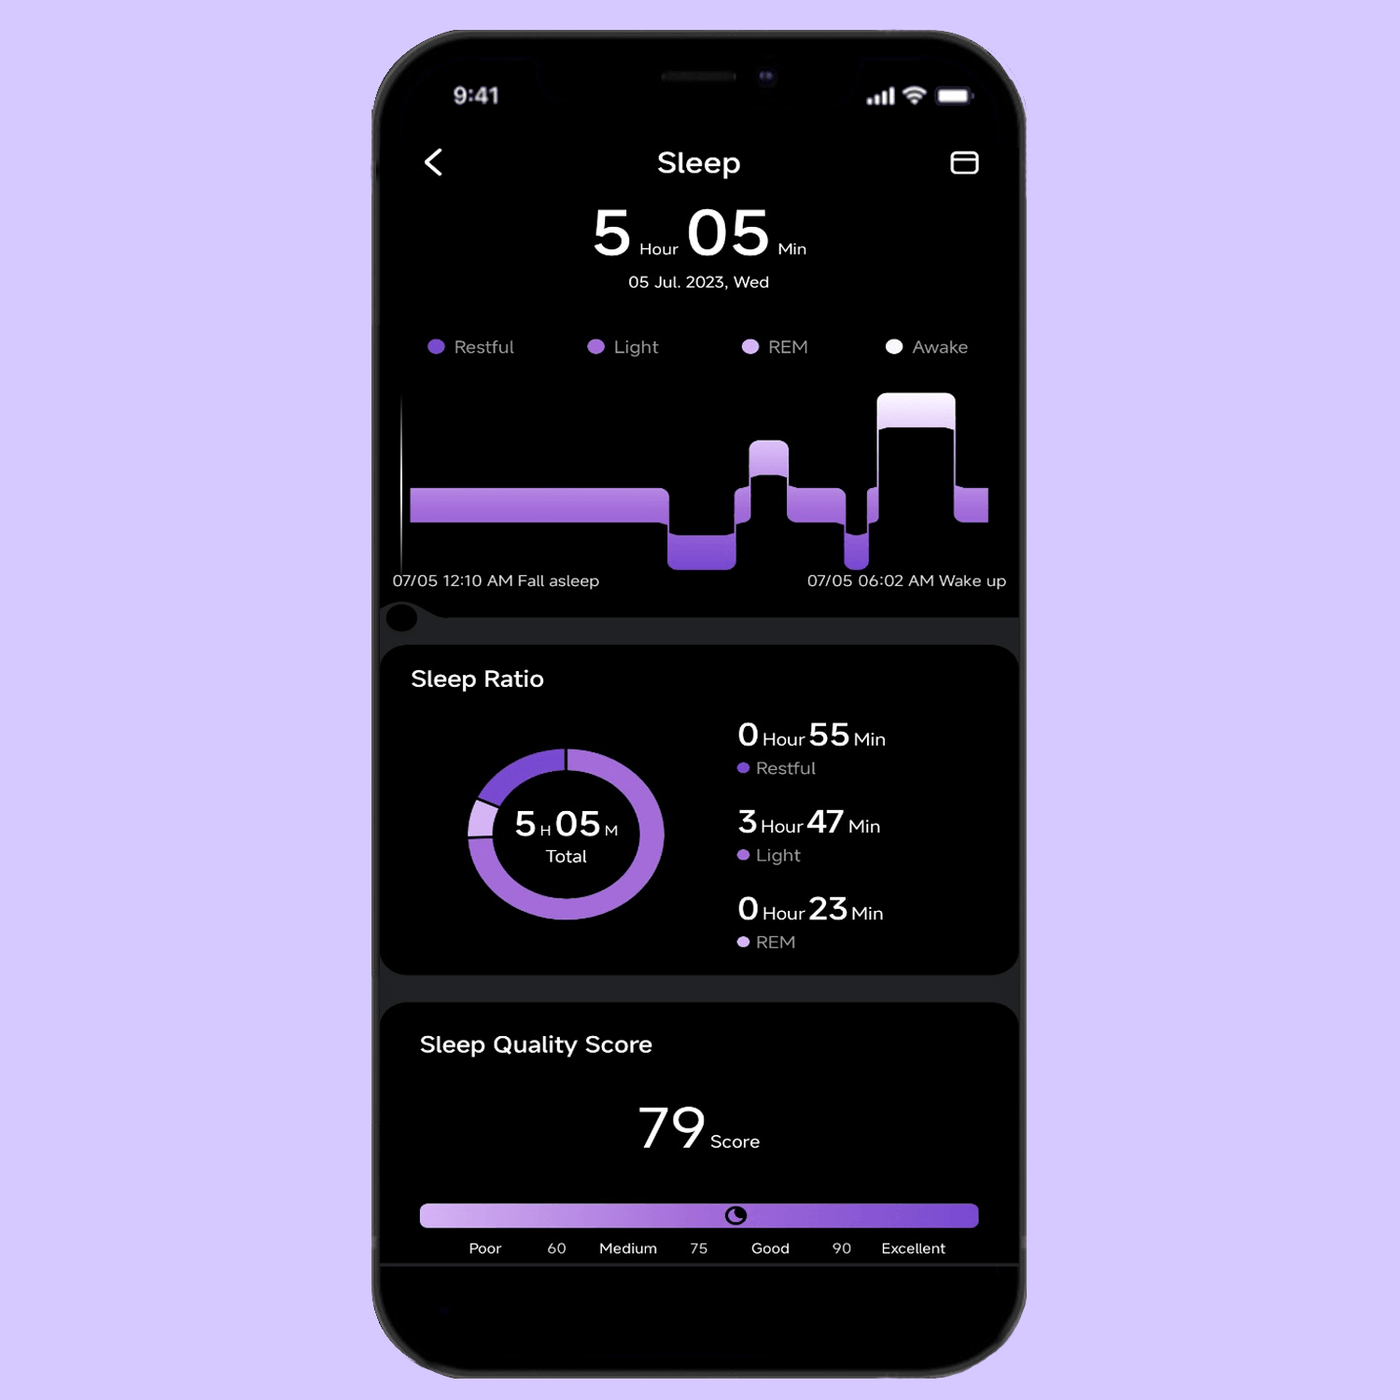 [Sleep] Monitoring